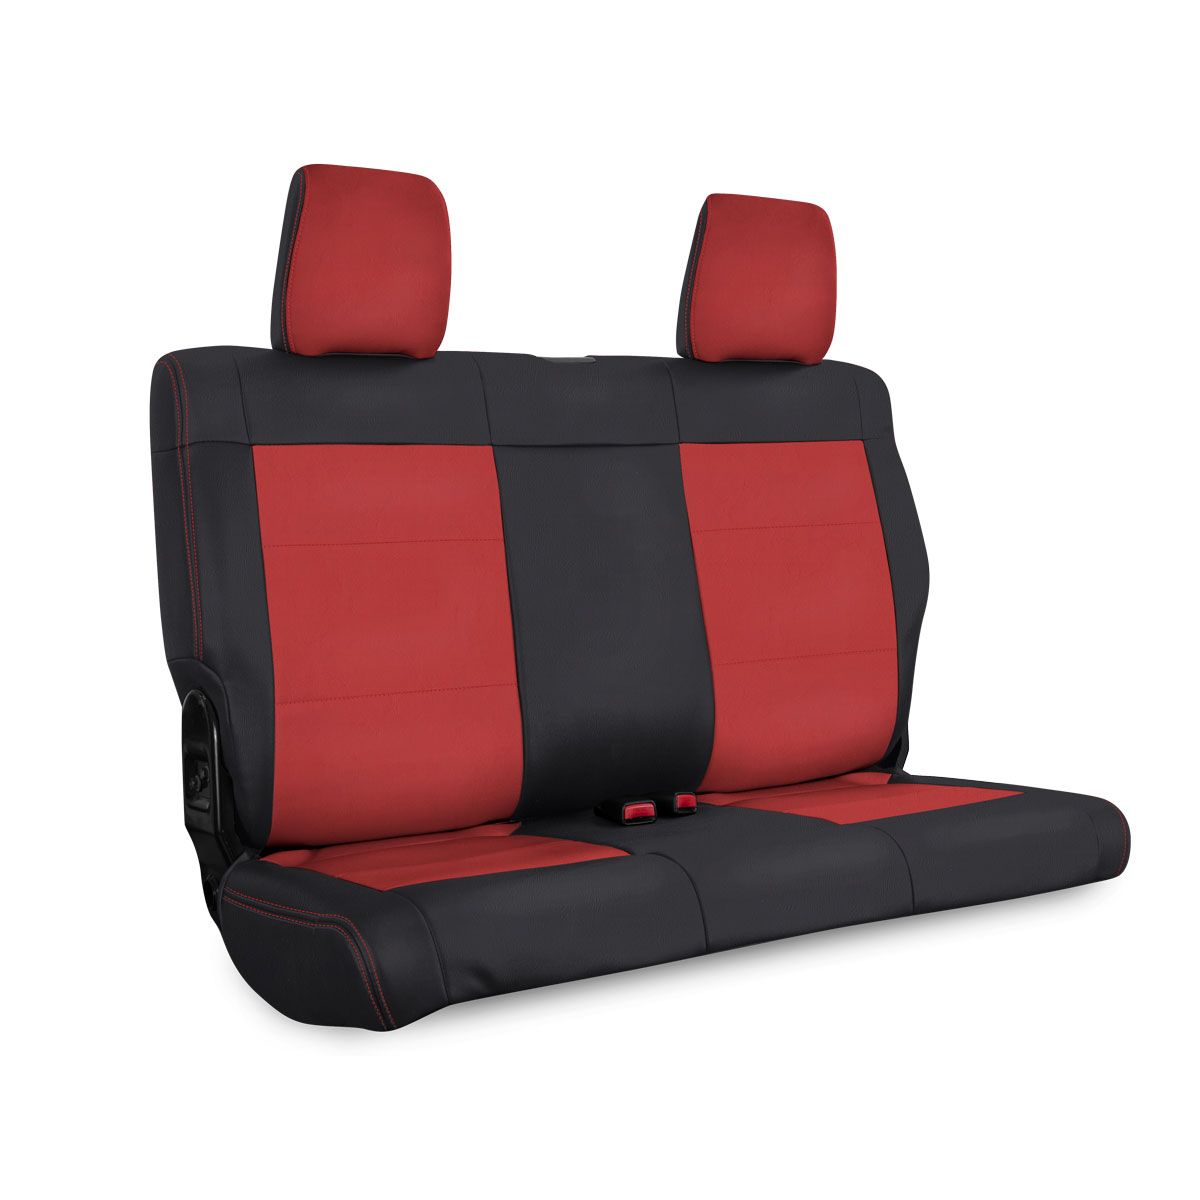 PRP 07 Jeep Wrangler JKU Rear Seat Cover/4 door - Black/Red